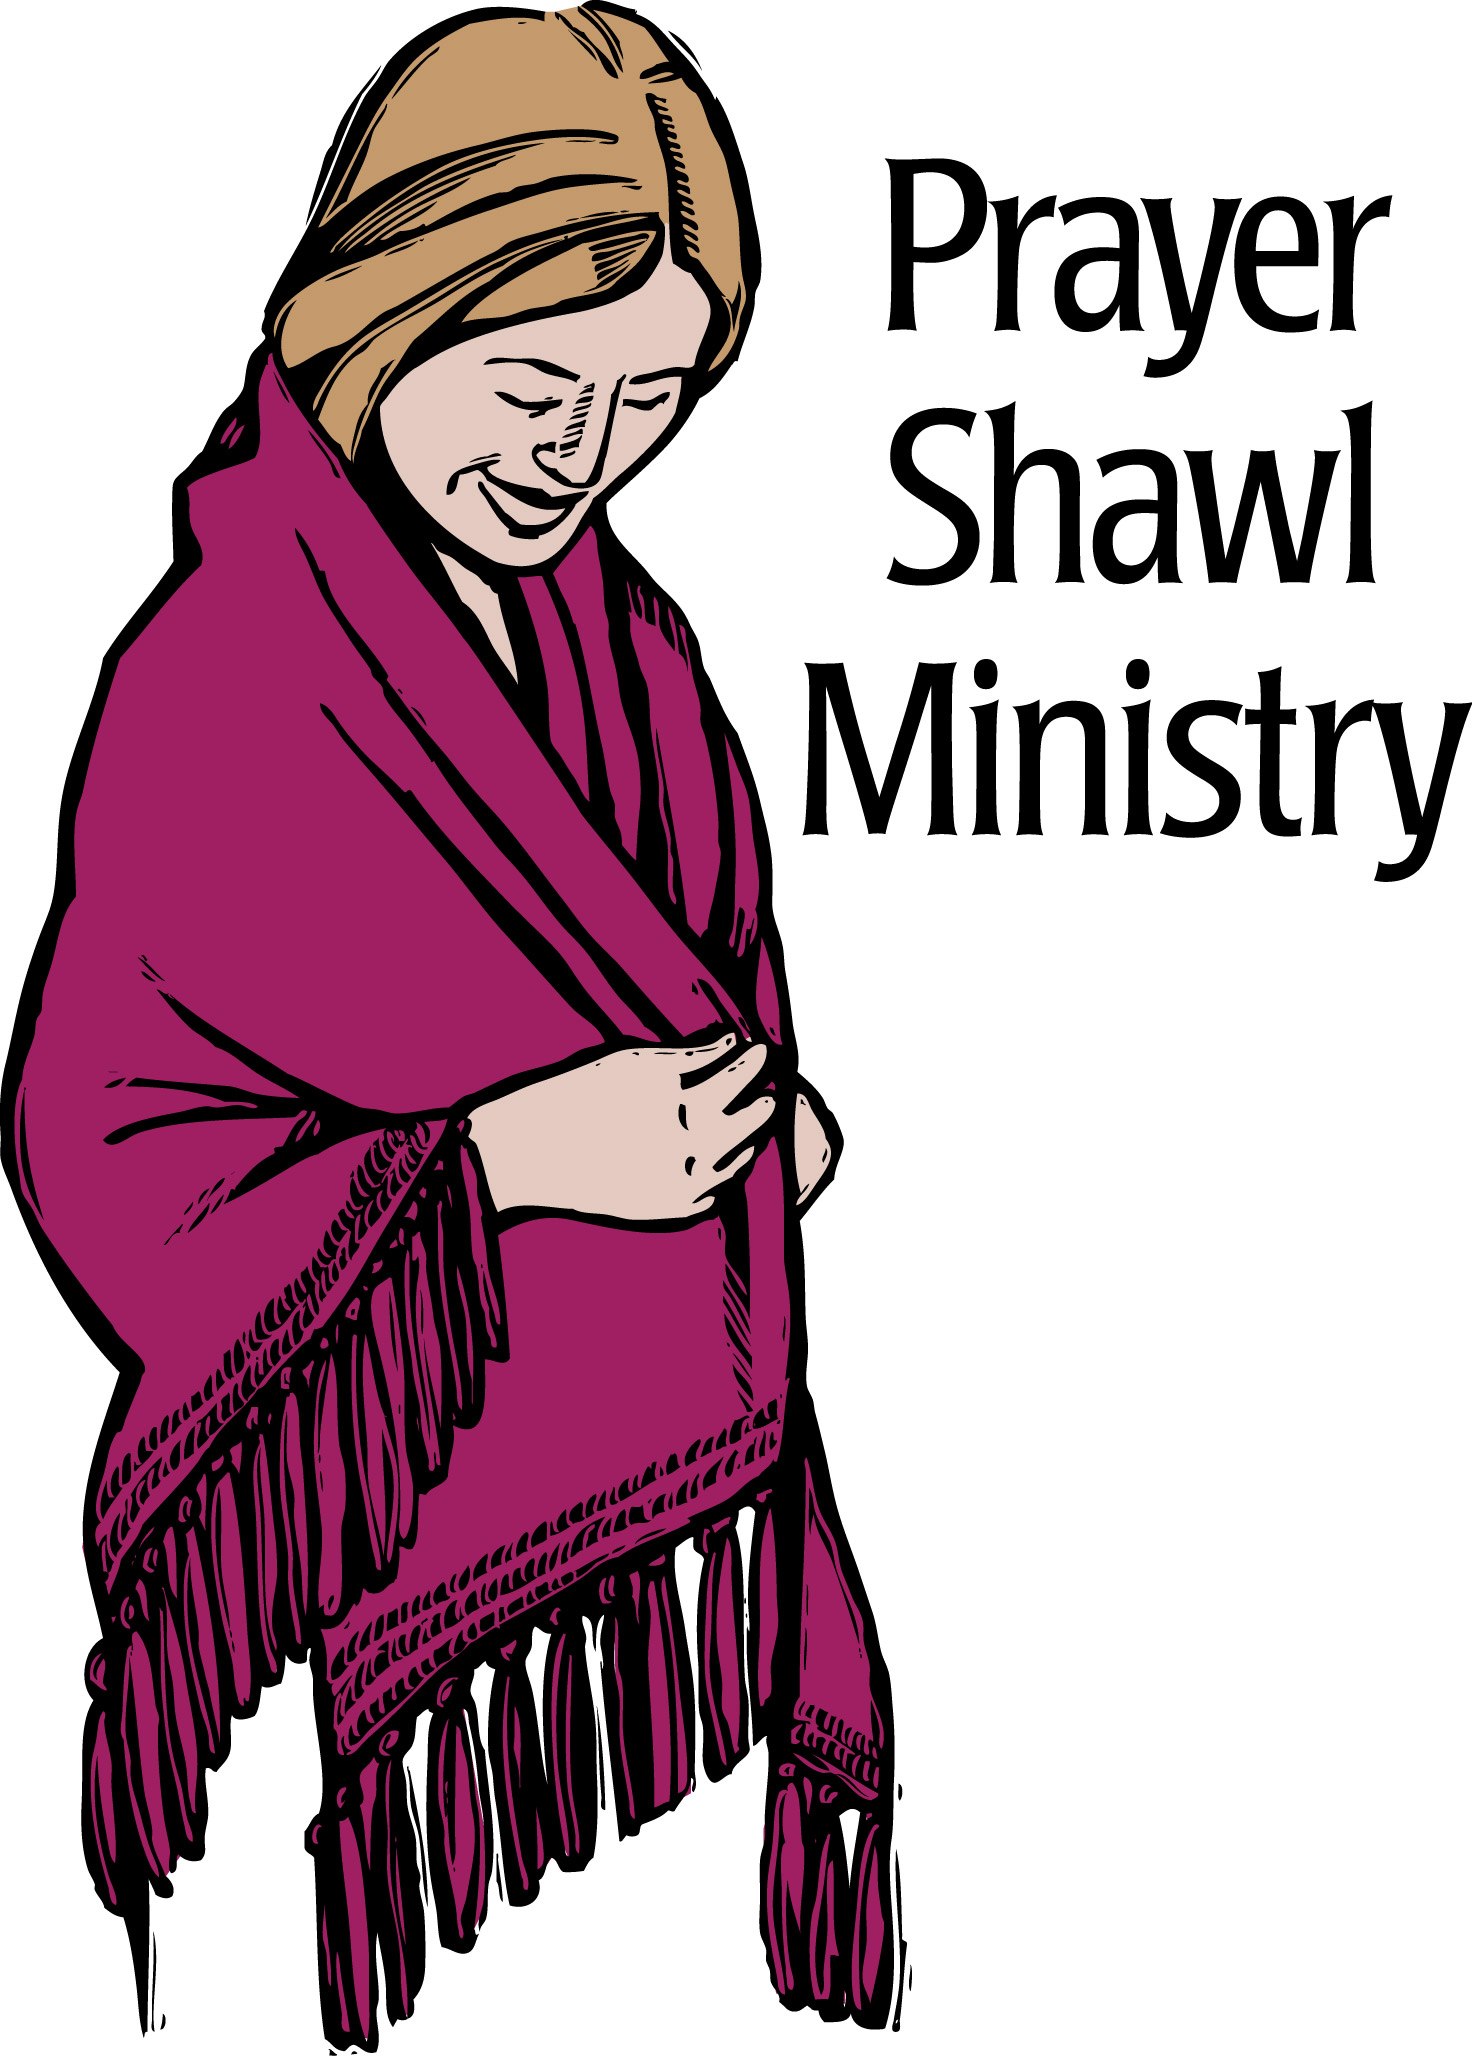 Knitted Prayer Shawl